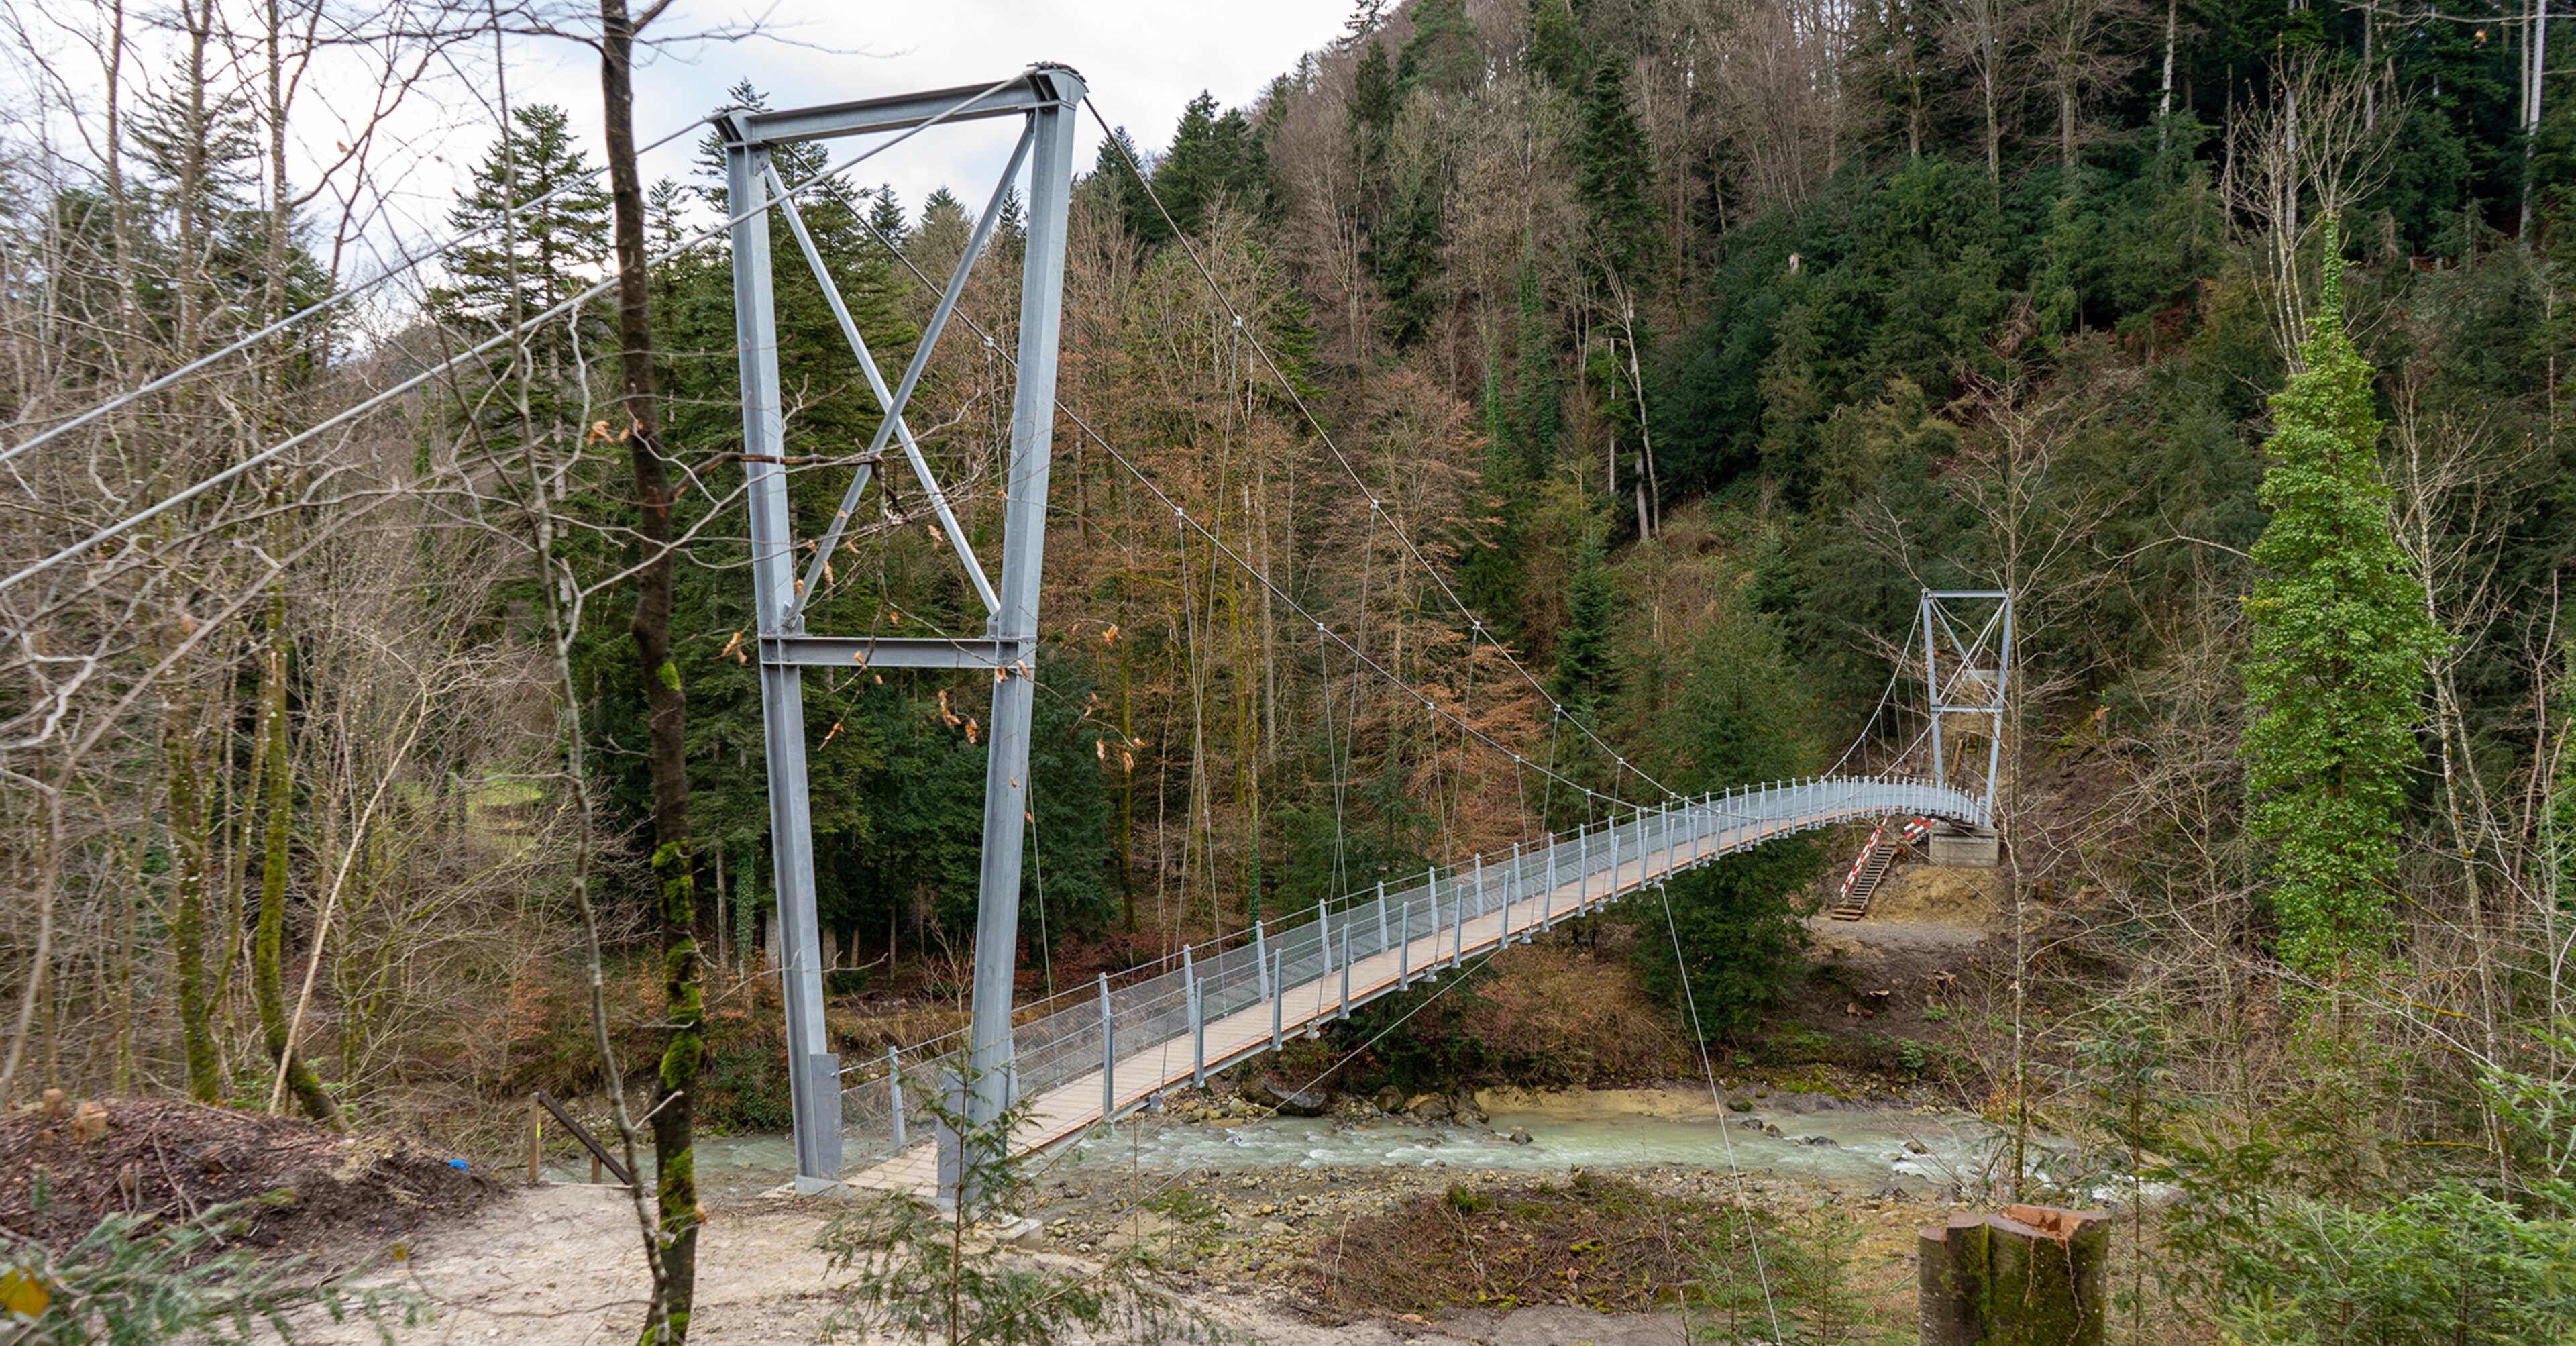 Goldach pedestrian bridge